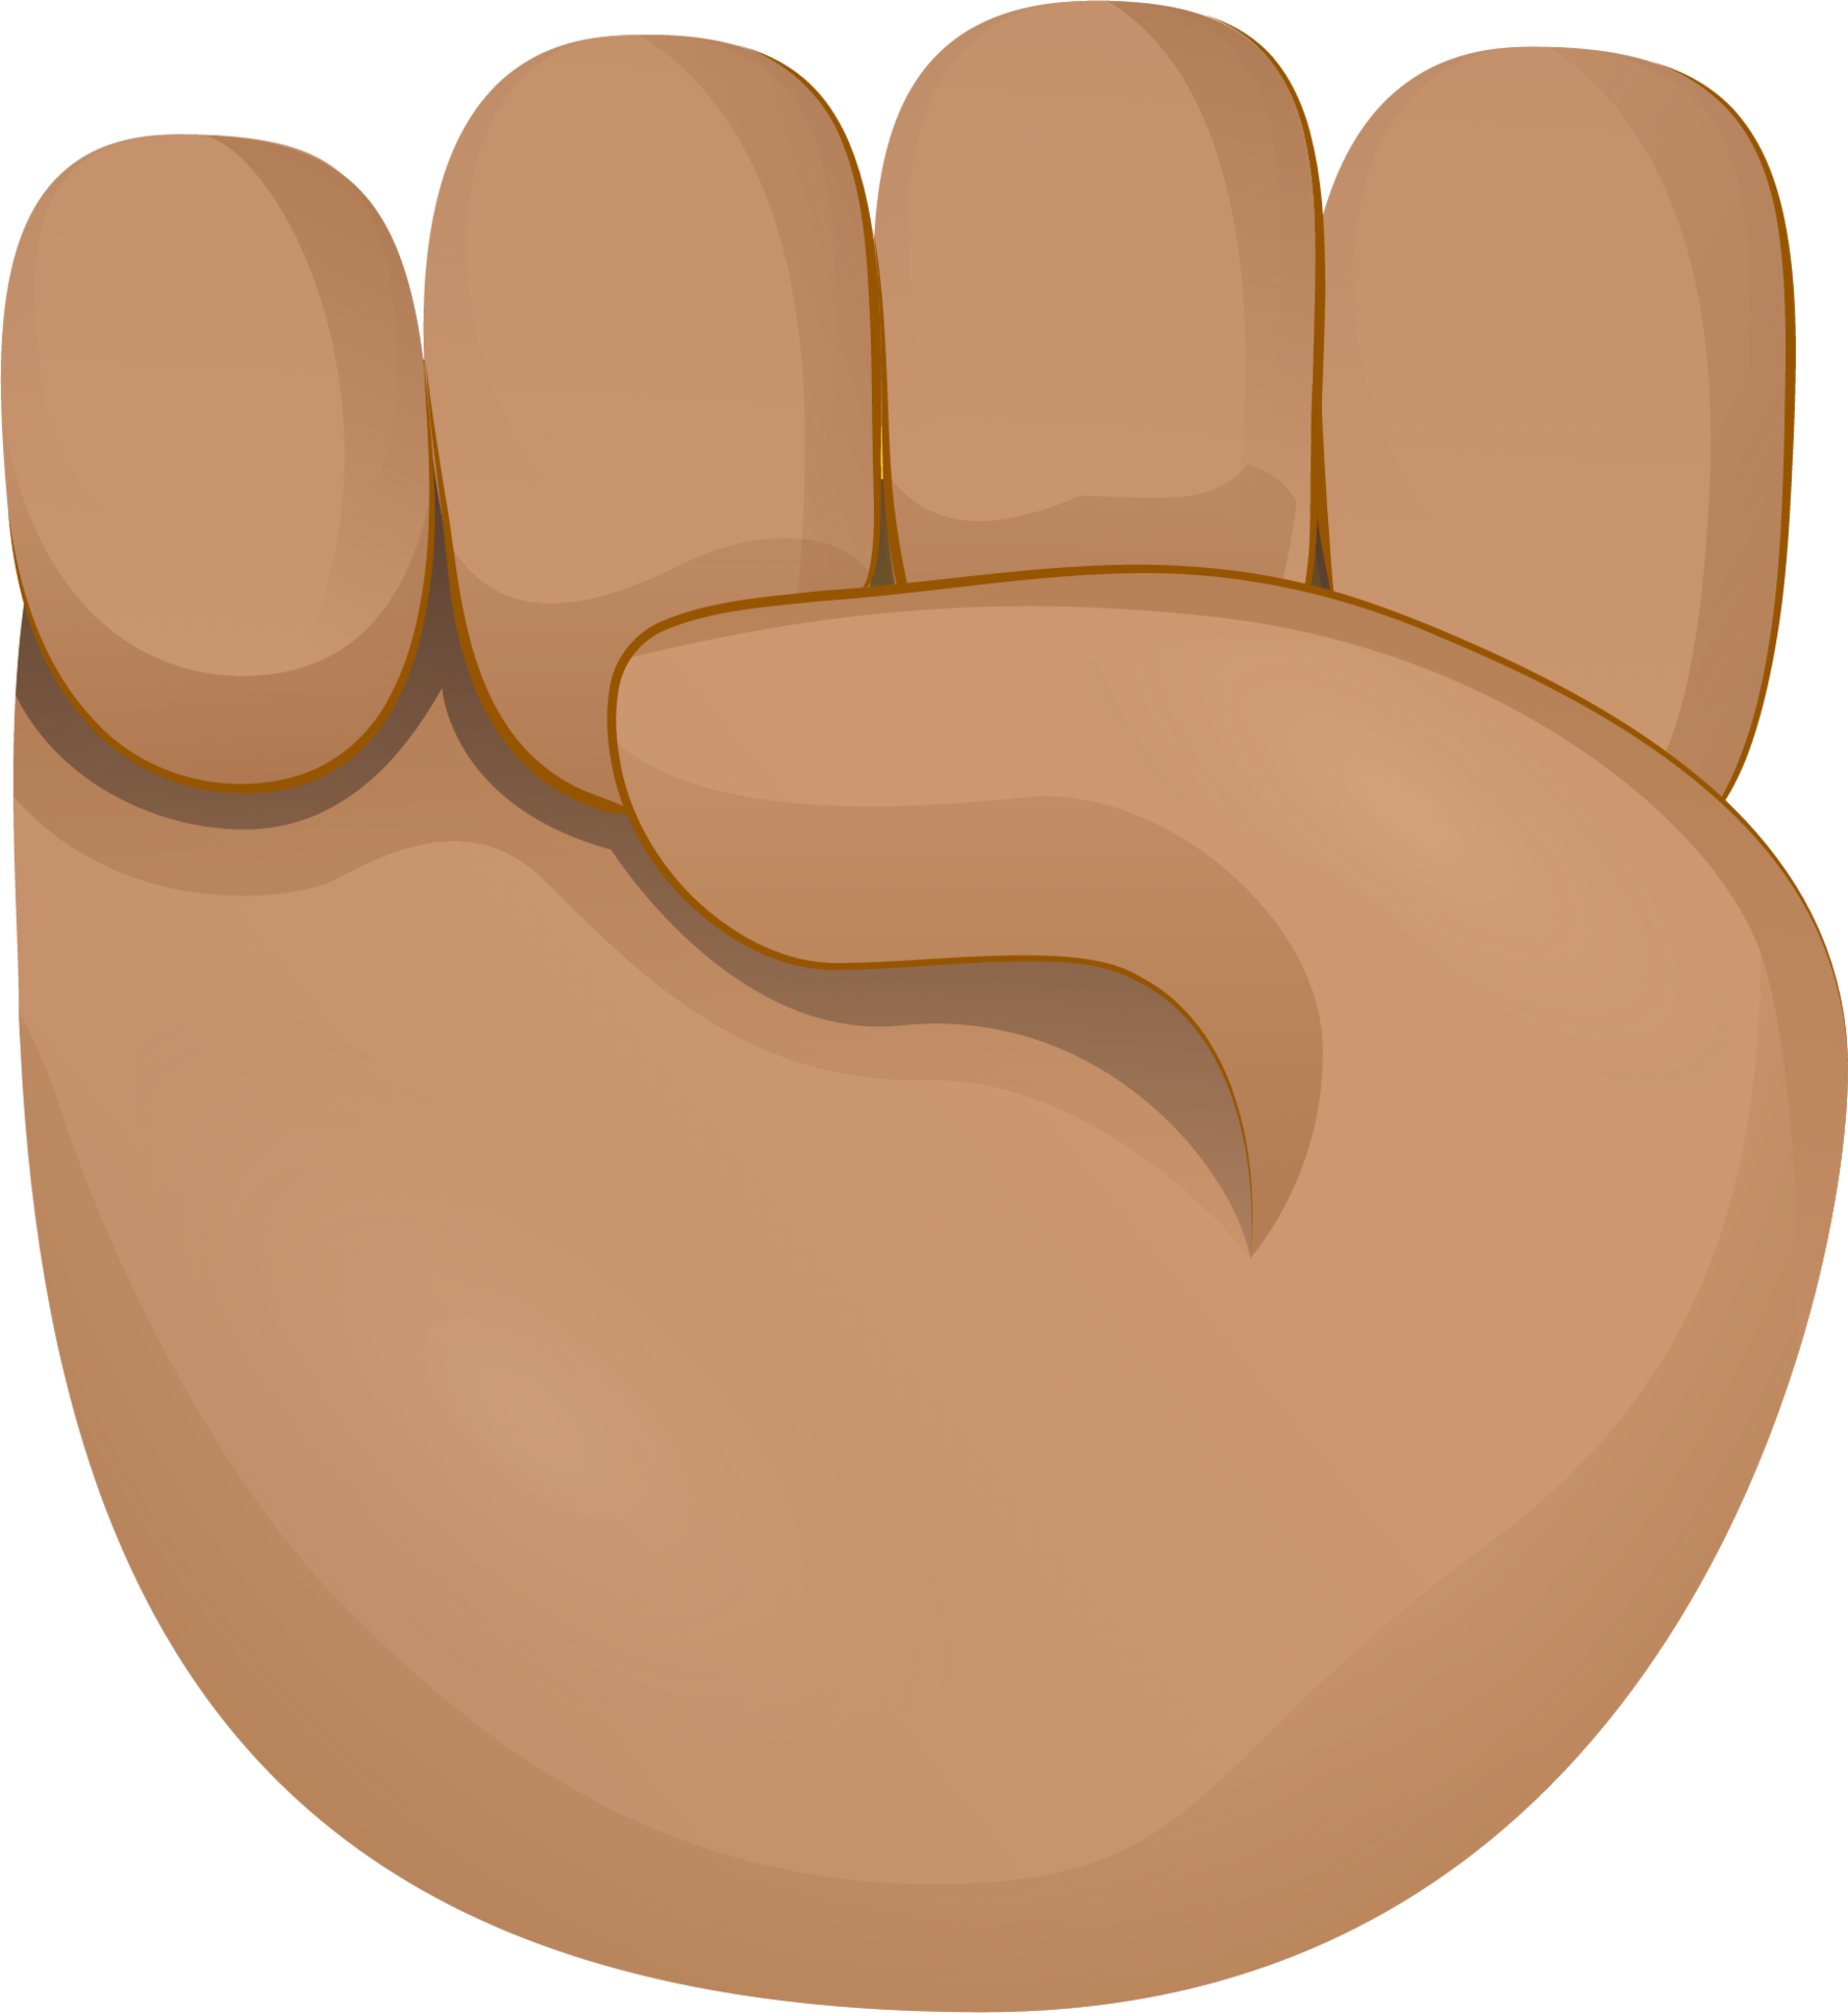 Raised fist skin 3 emoji emoji